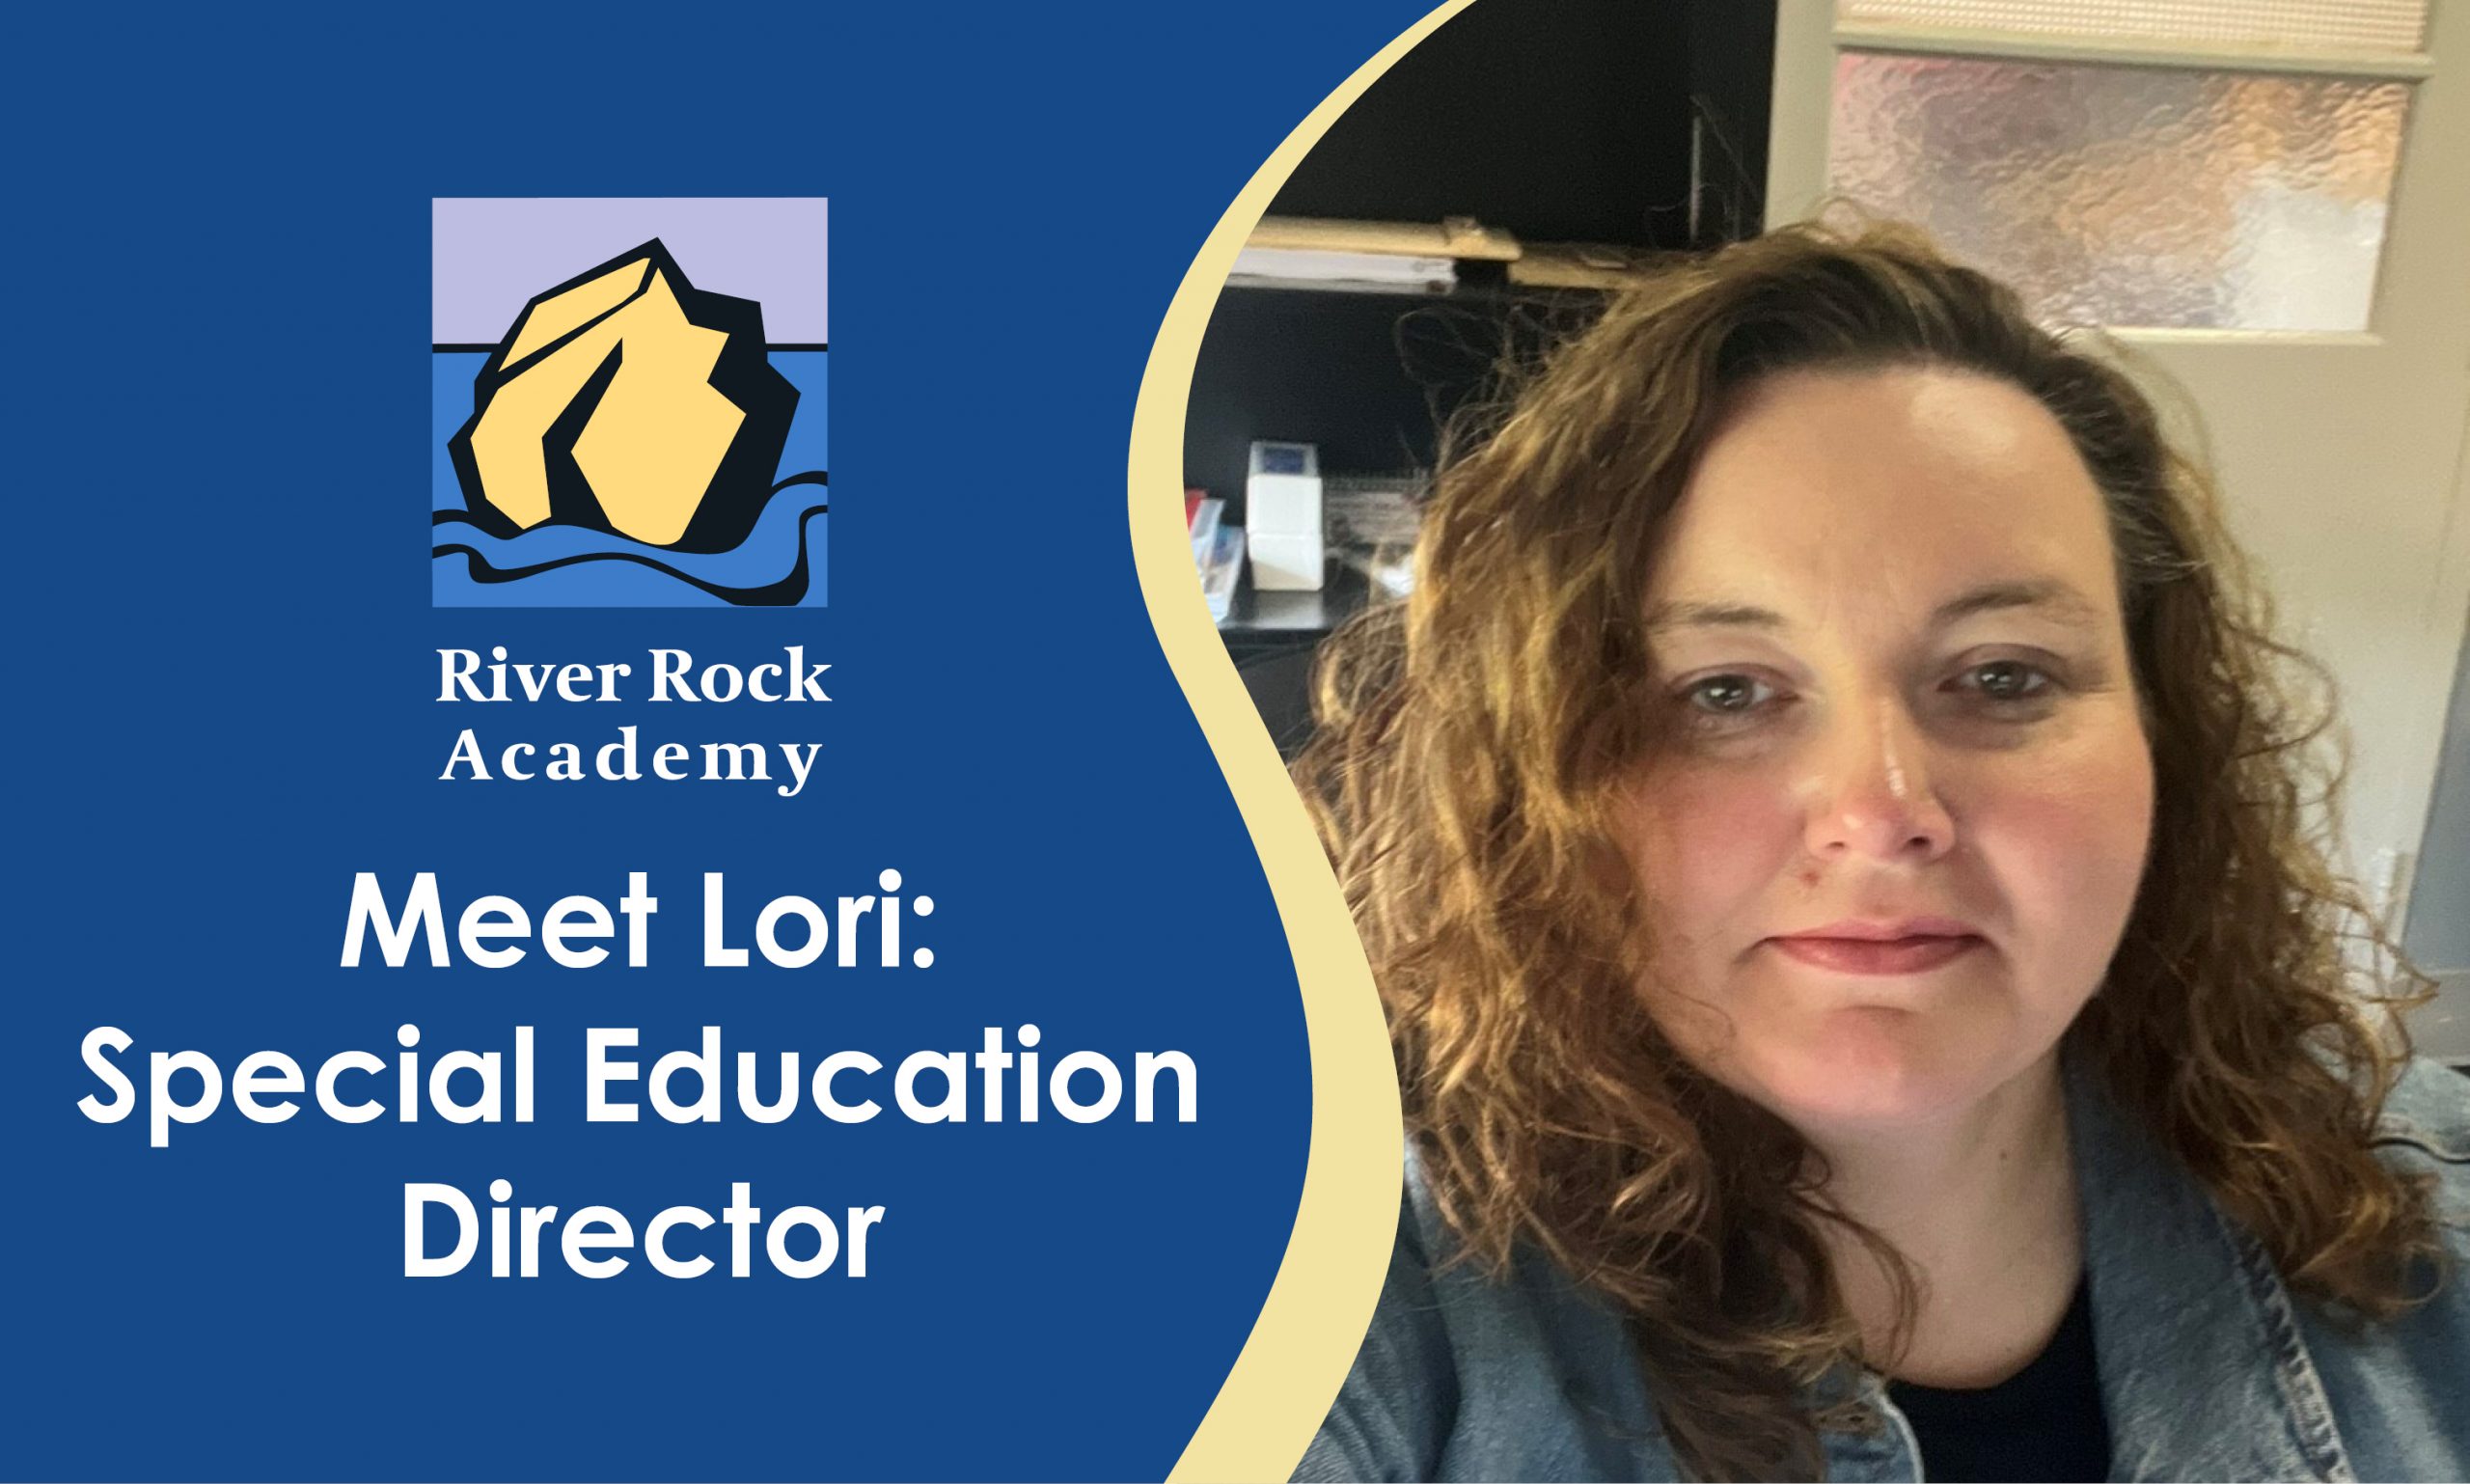 Meet Lori: Special Education Director